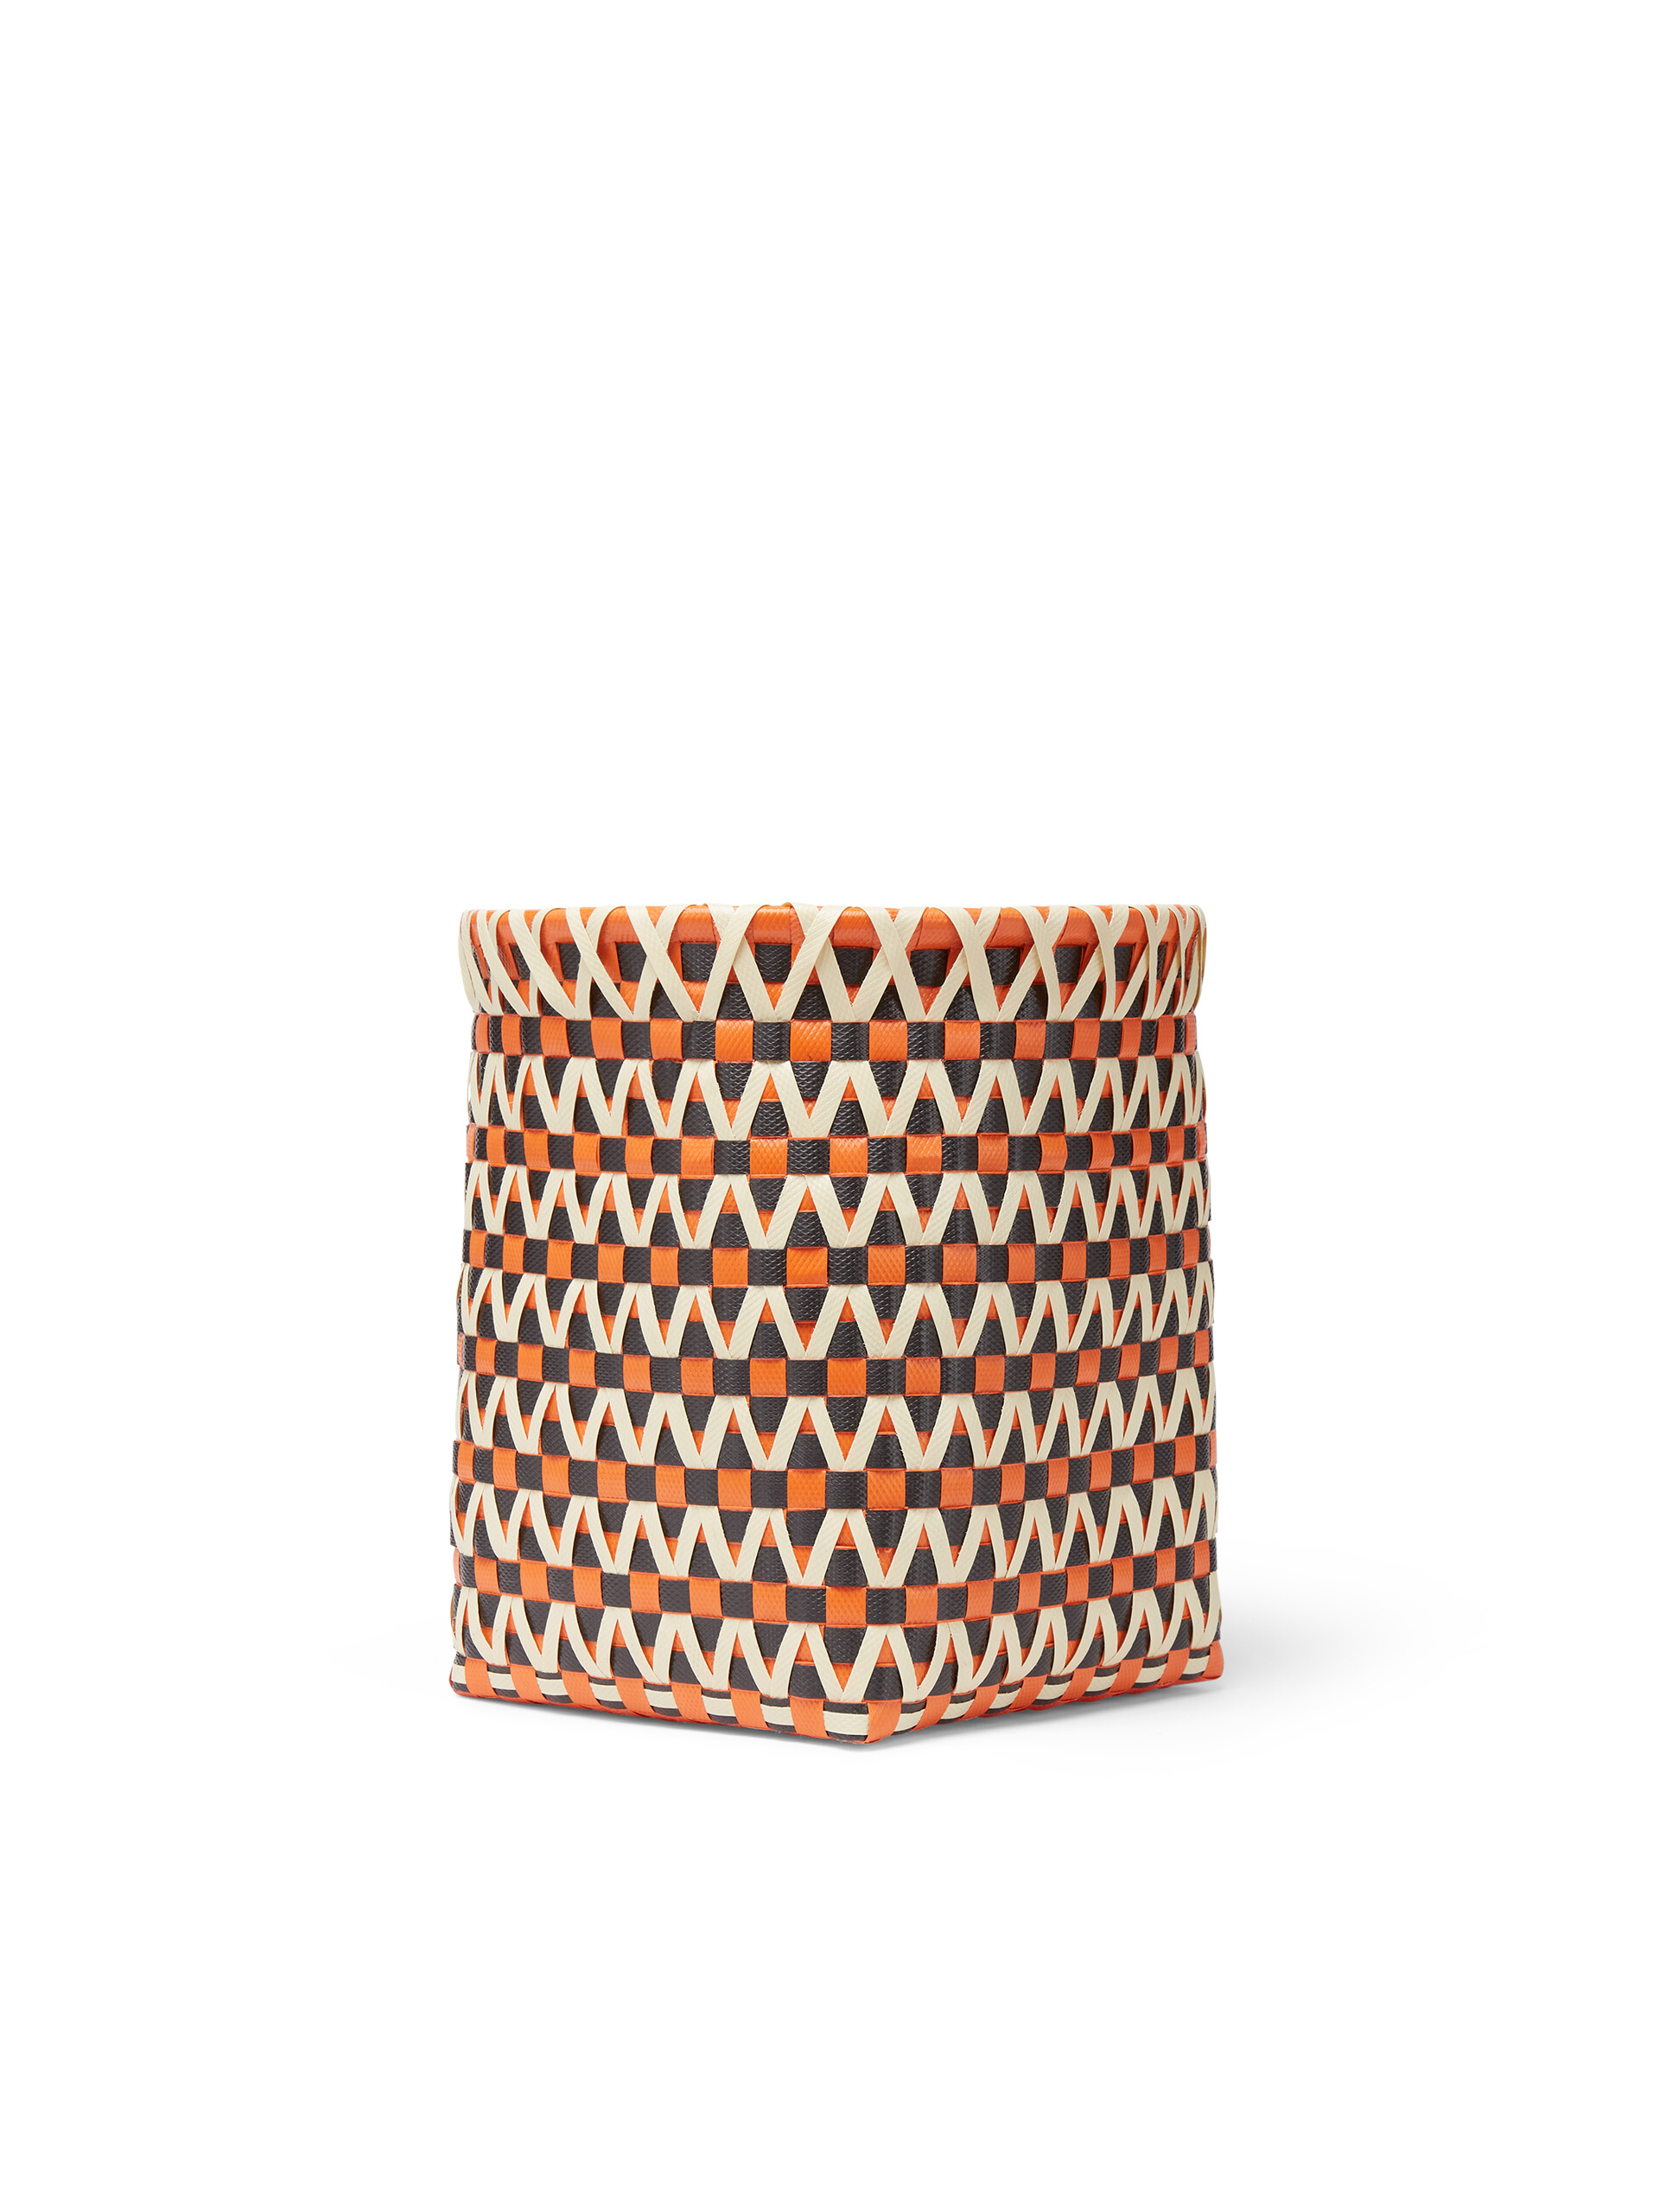 MARNI MARKET basket in orange black and white woven PVC - Home Accessories - Image 2